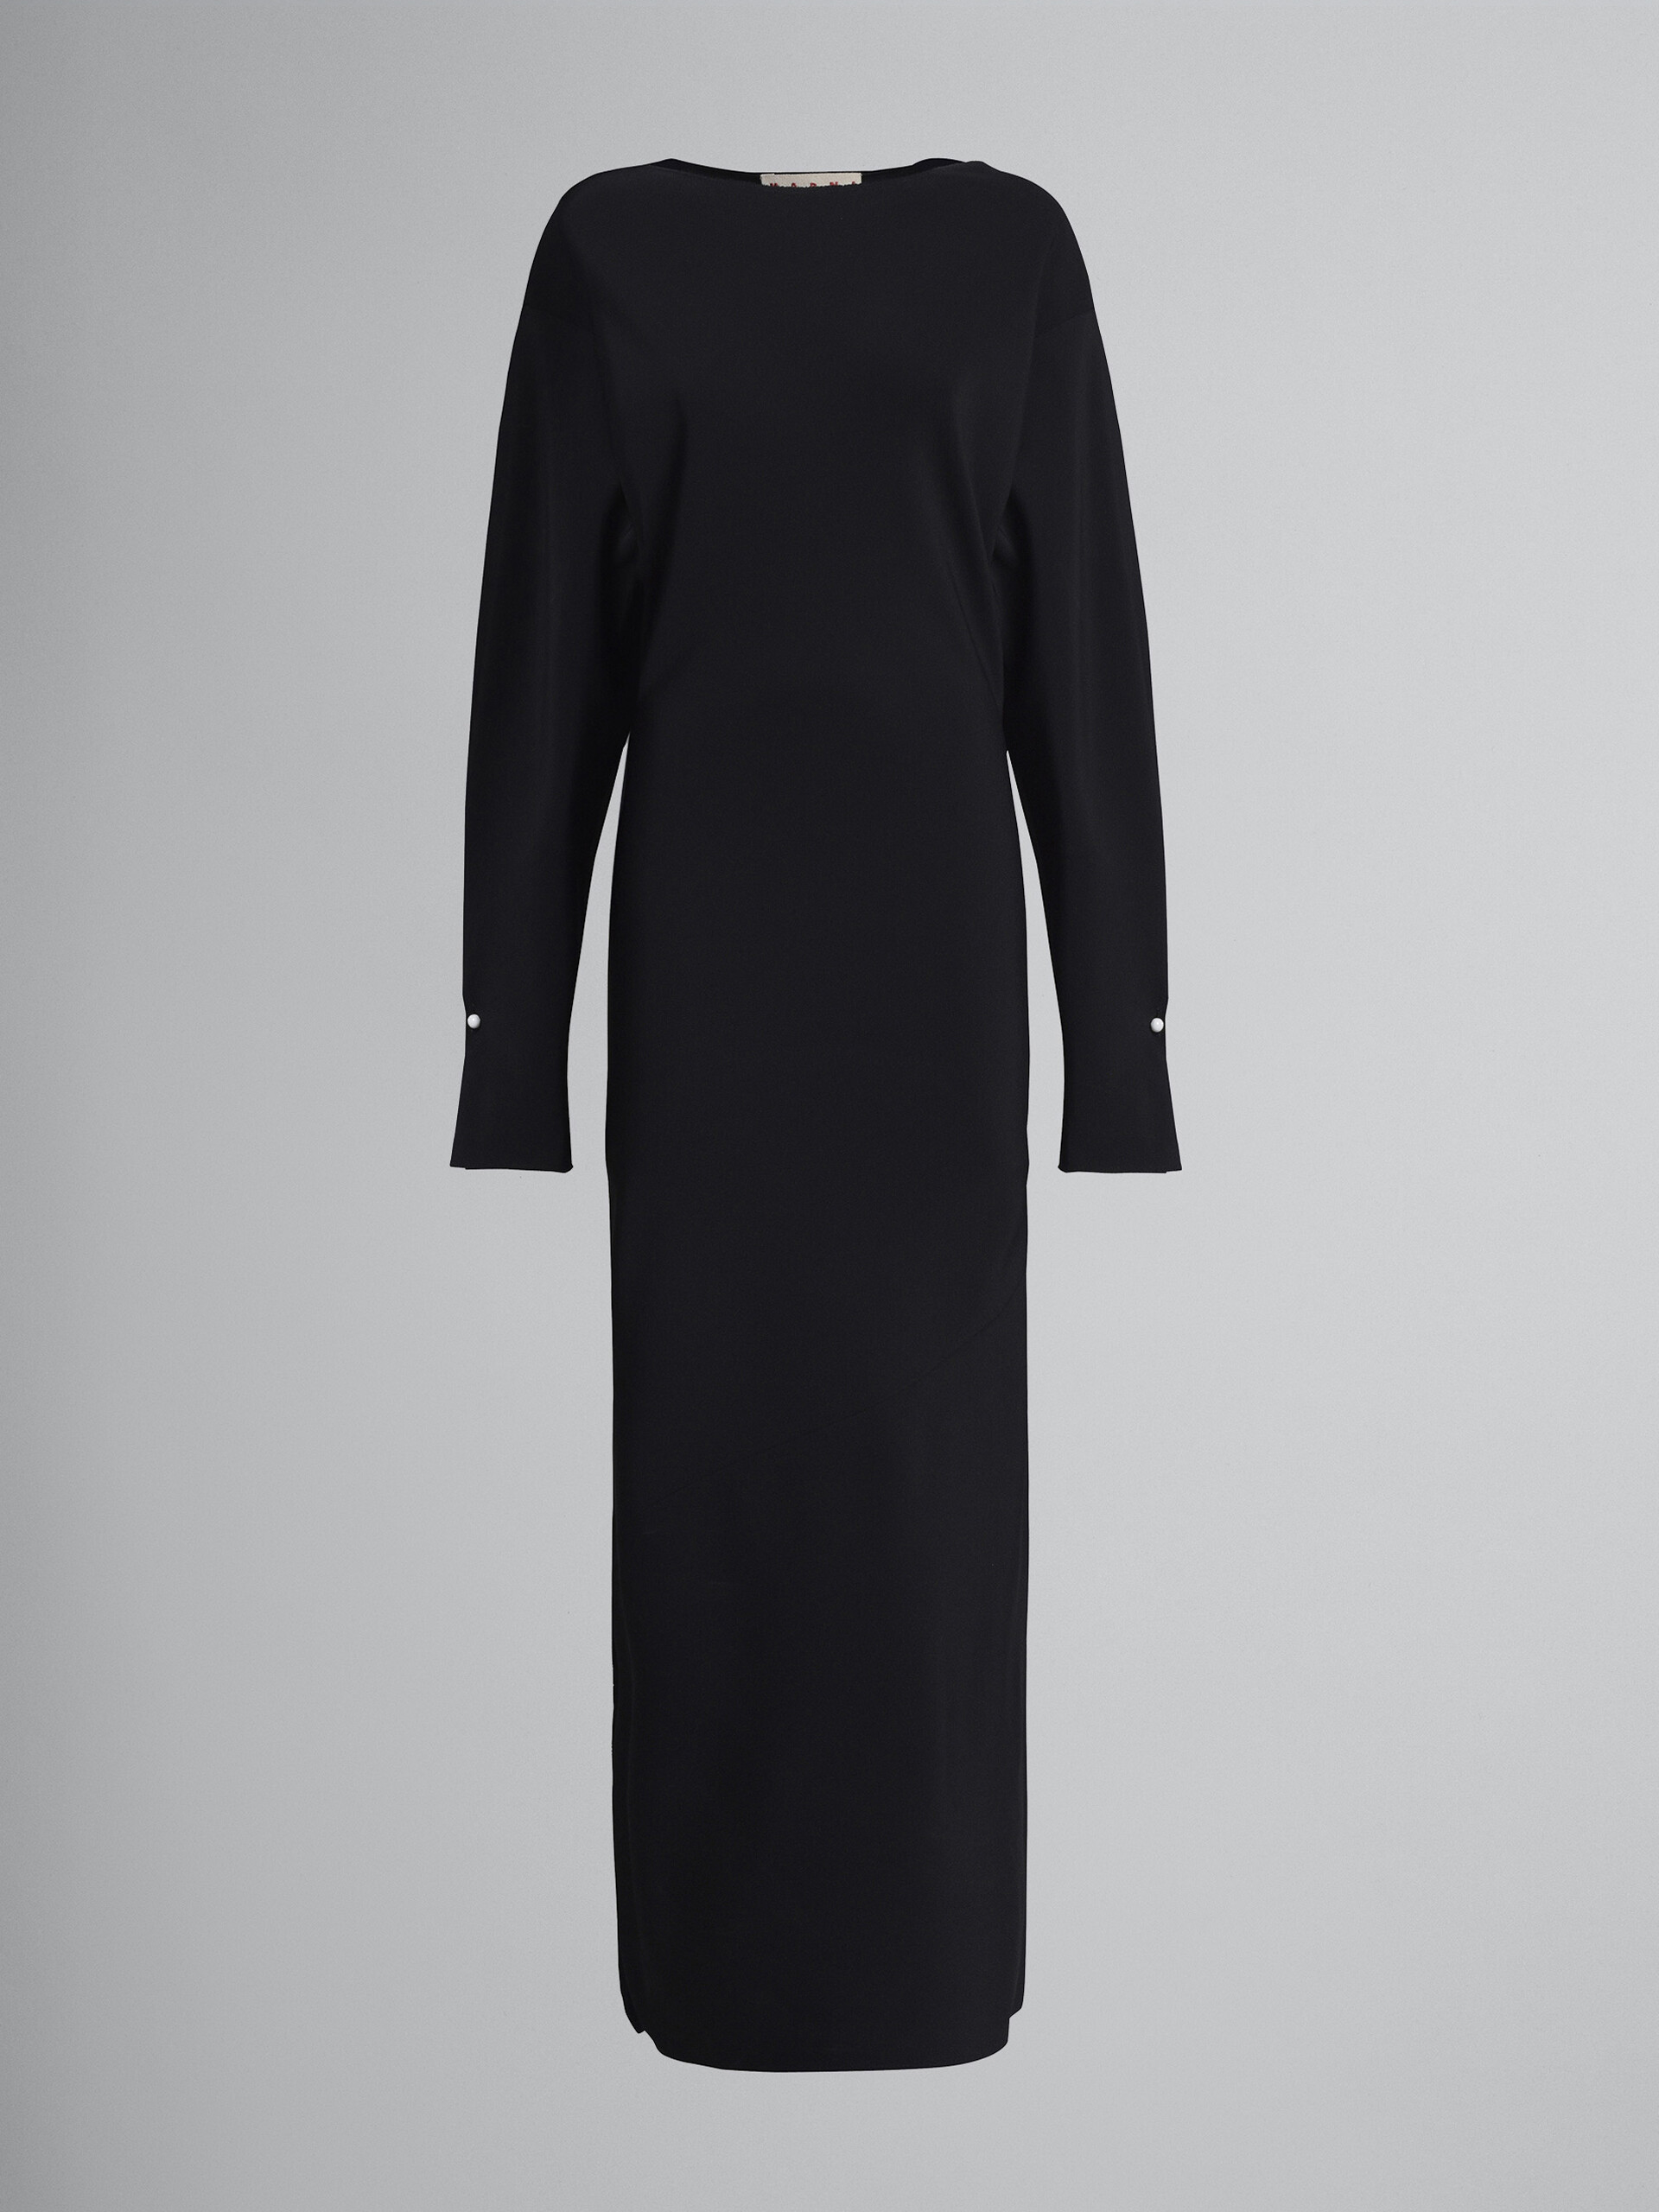 Black stretch cady long dress - Dresses - Image 1